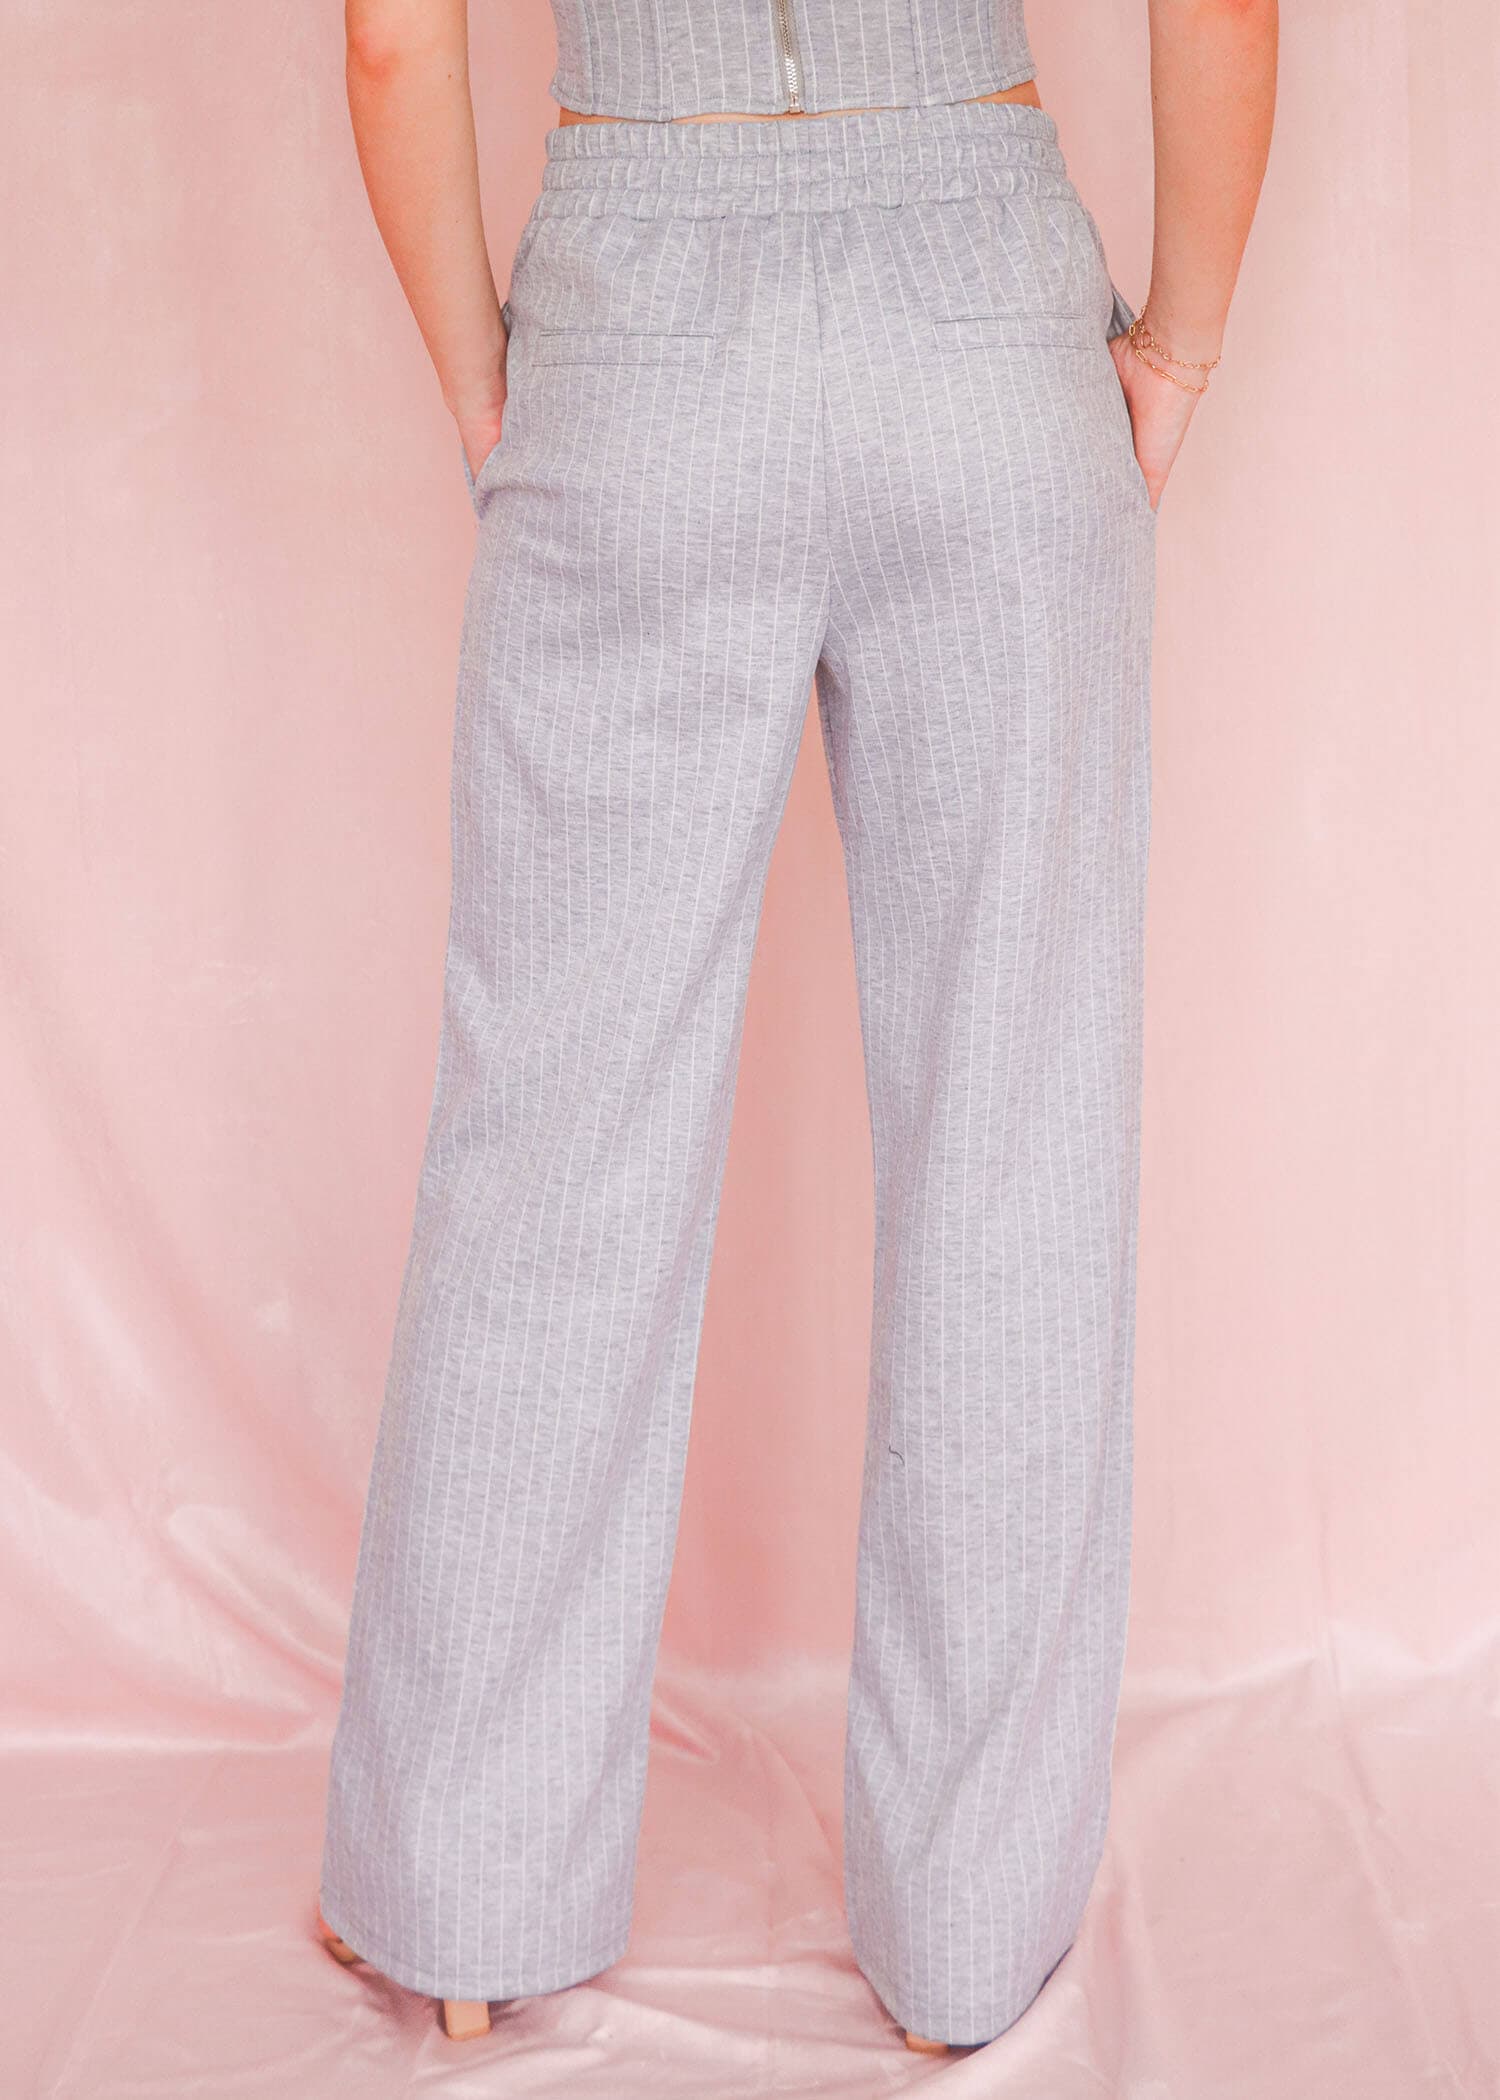 Go With It Wide Leg Pants - Heather Grey Pants MerciGrace Boutique.